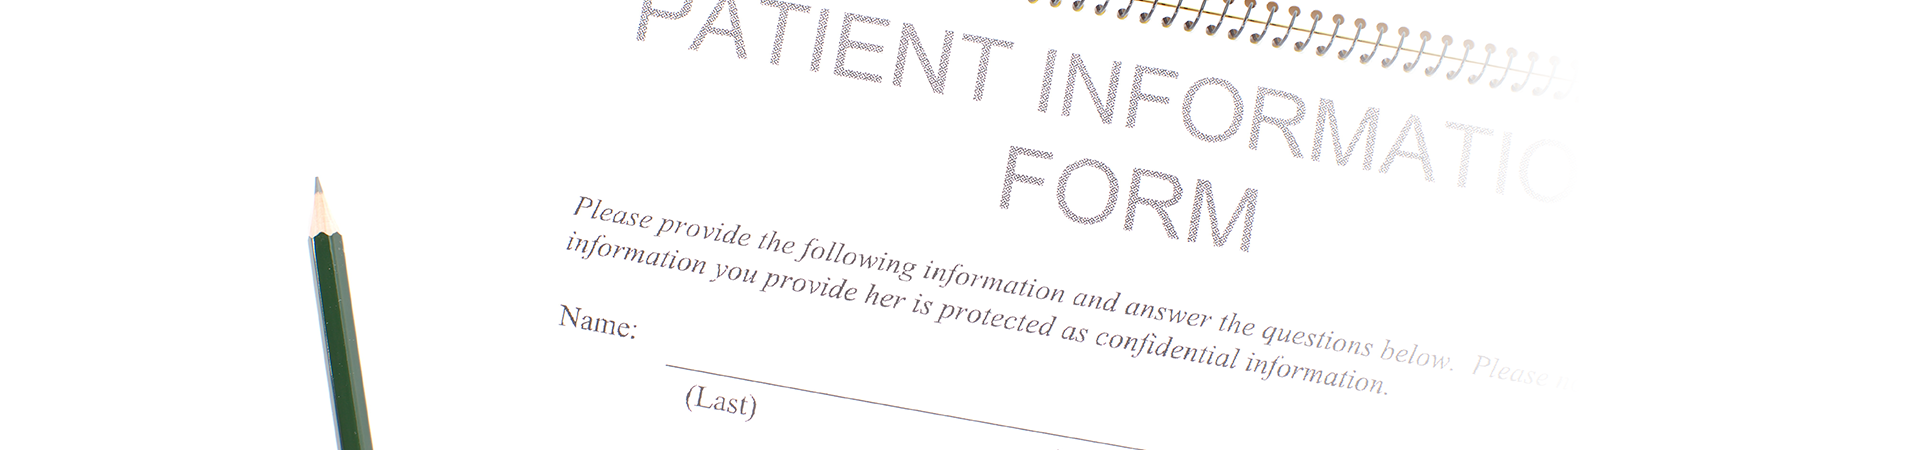 Patient Forms background